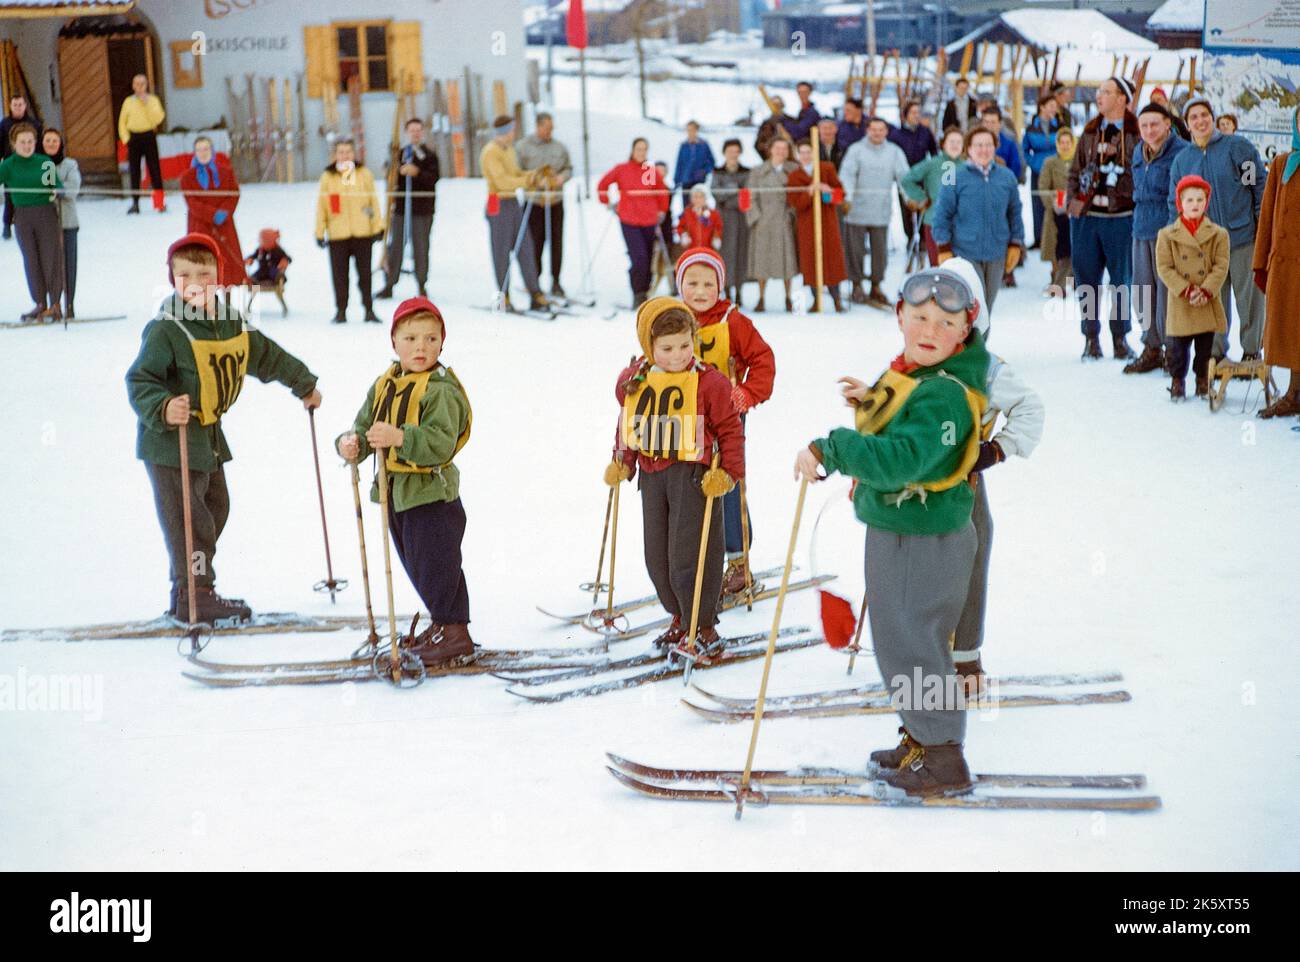 Gruppo di giovani sciatori, St. Anton am Arlberg, Tirolo, Austria, toni Frissell Collection, gennaio 1955 Foto Stock